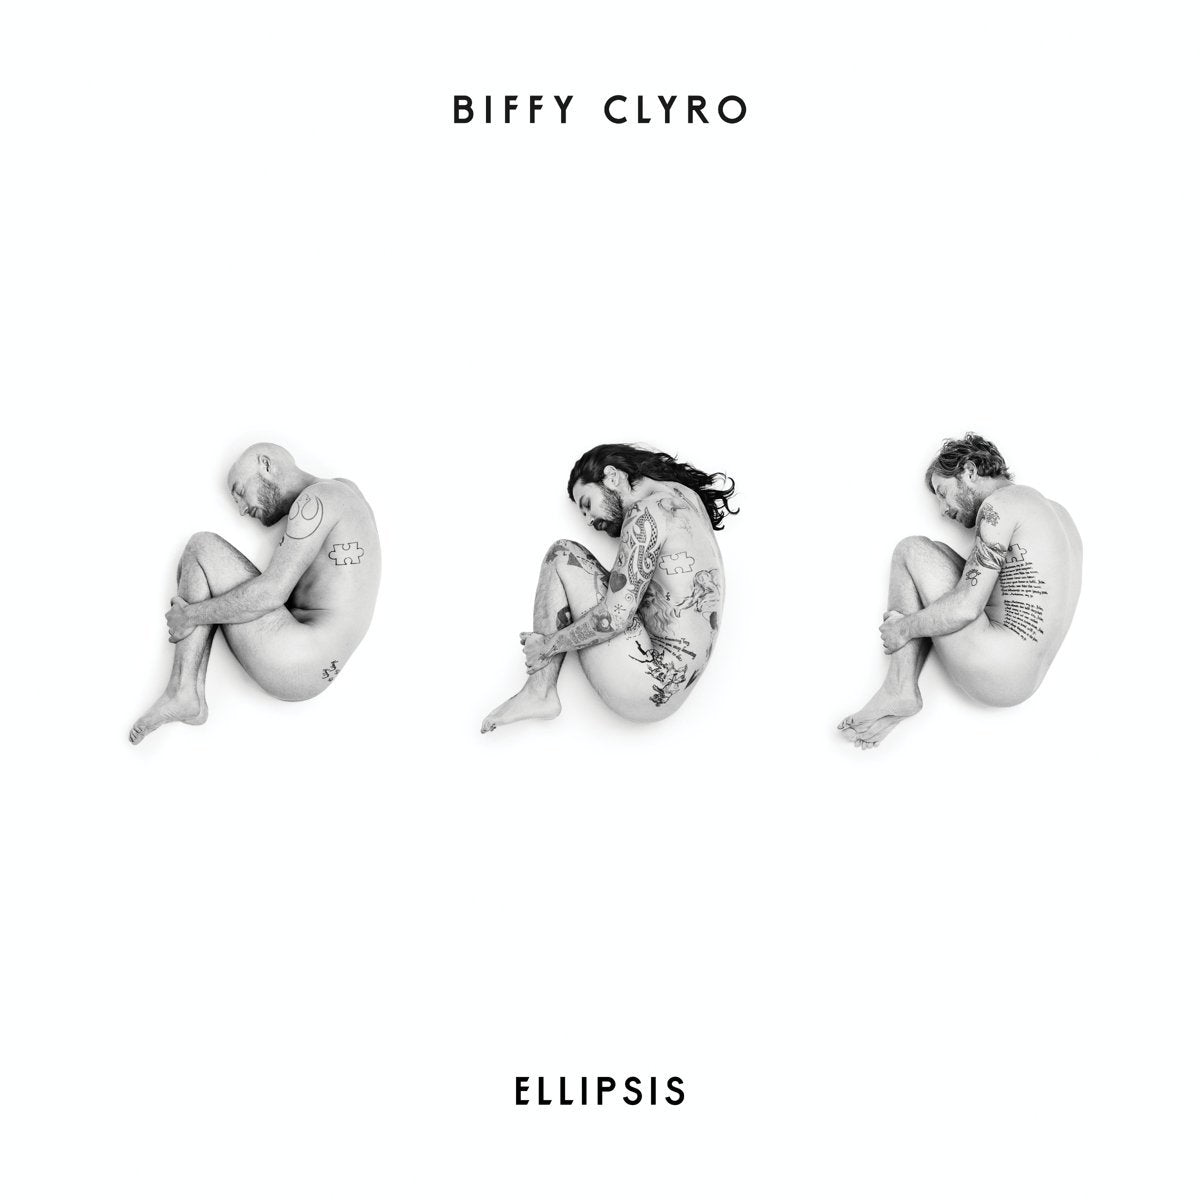 Biffy Clyro "Ellipsis" Black Vinyl